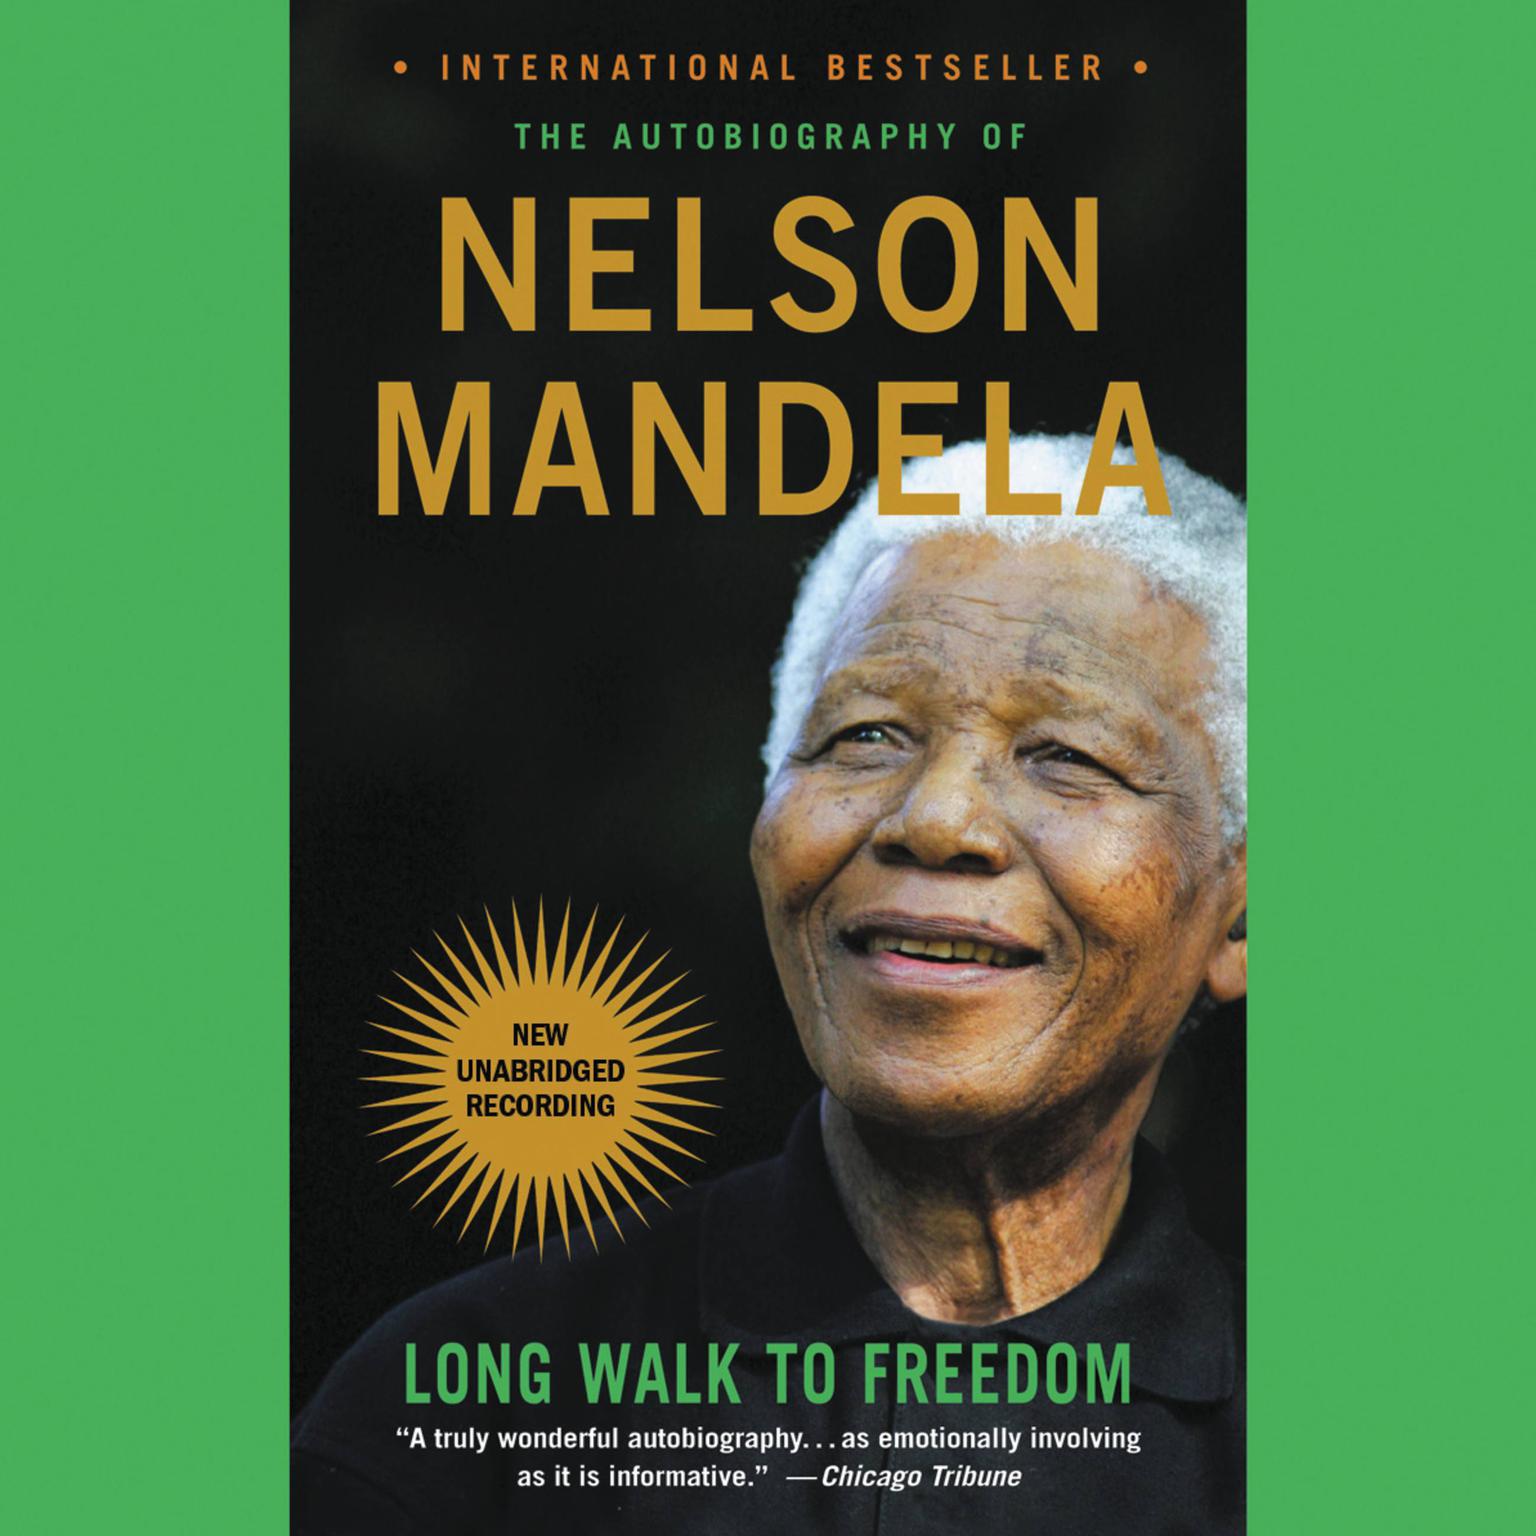 Long Walk to Freedom: The Autobiography of Nelson Mandela Audiobook, by Nelson Mandela